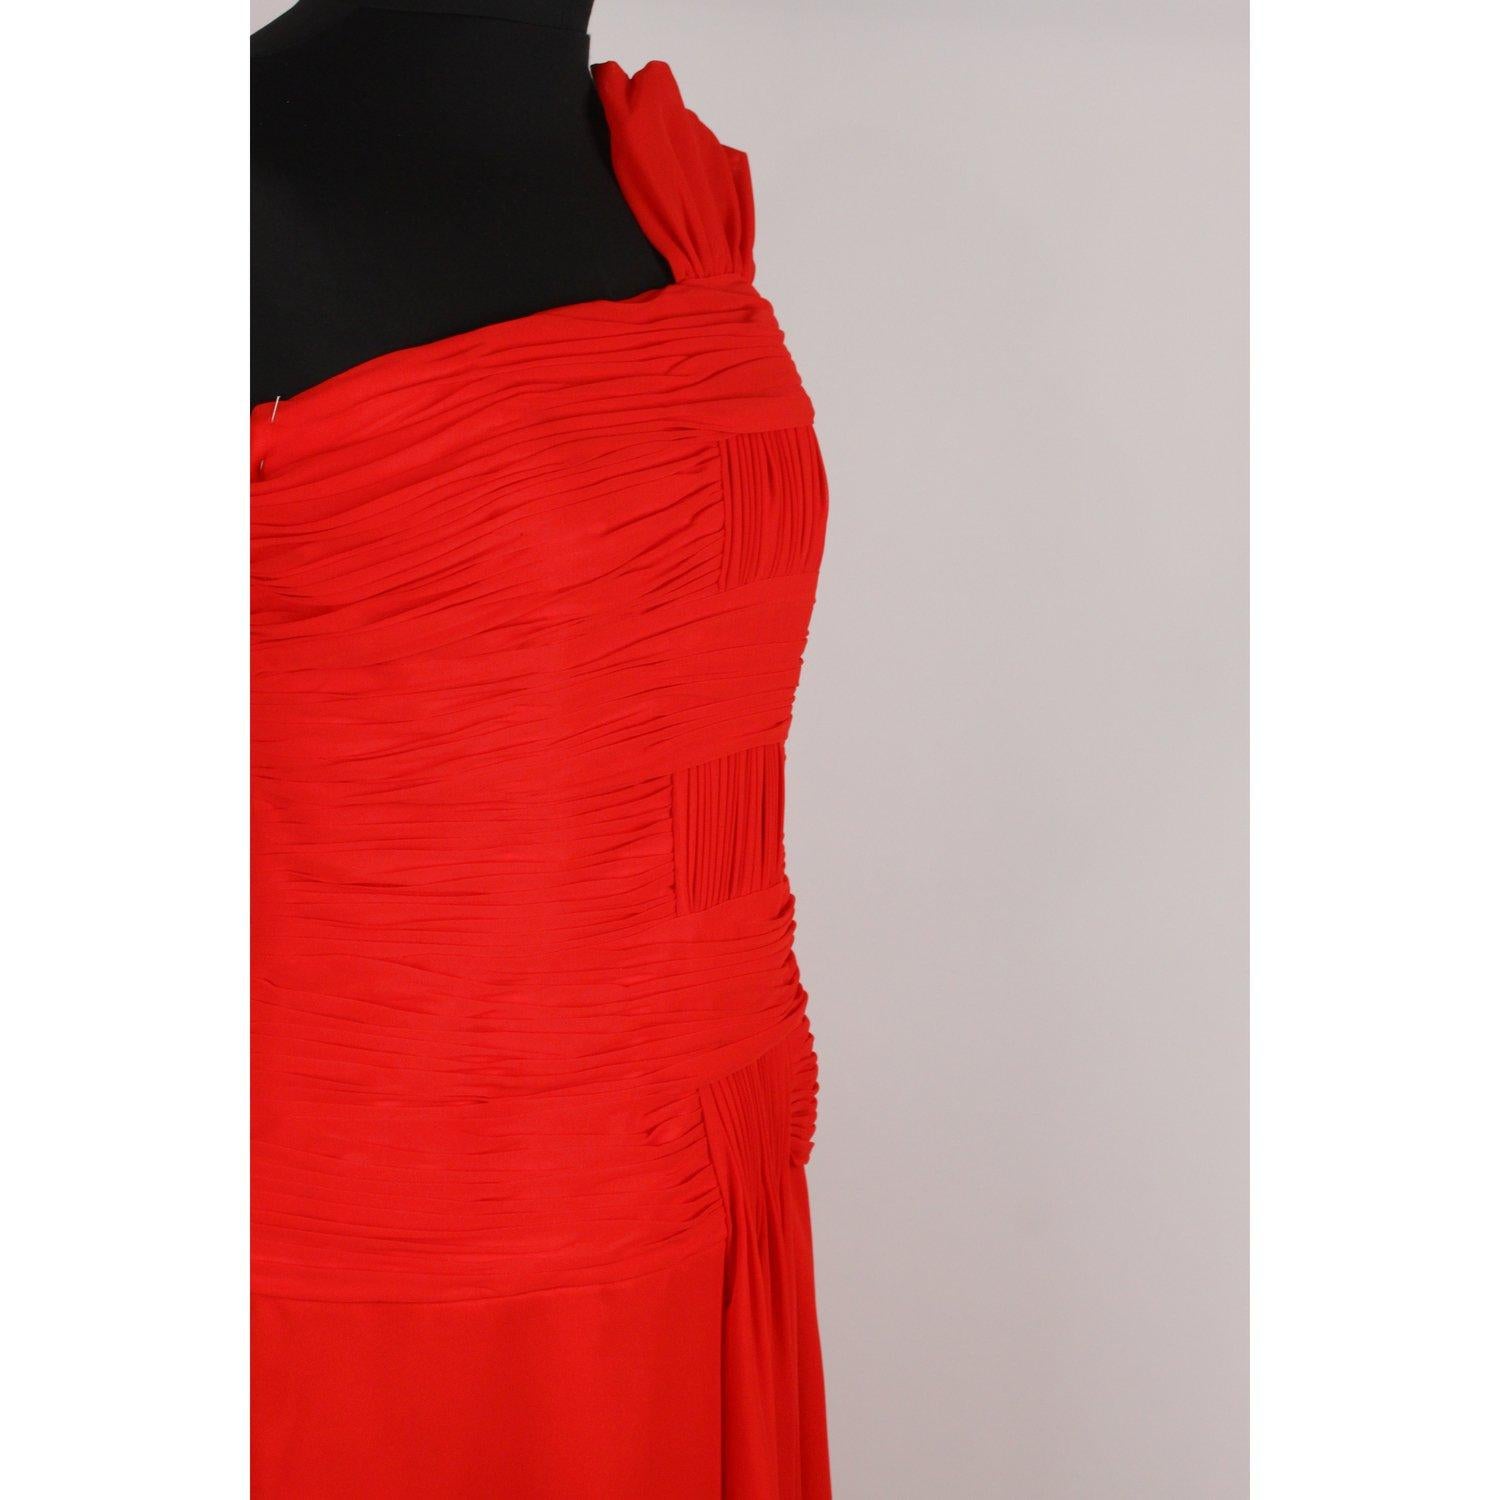 Carlo Pignatelli Red Chiffon One Shoulder Midi Dress Size 42 1